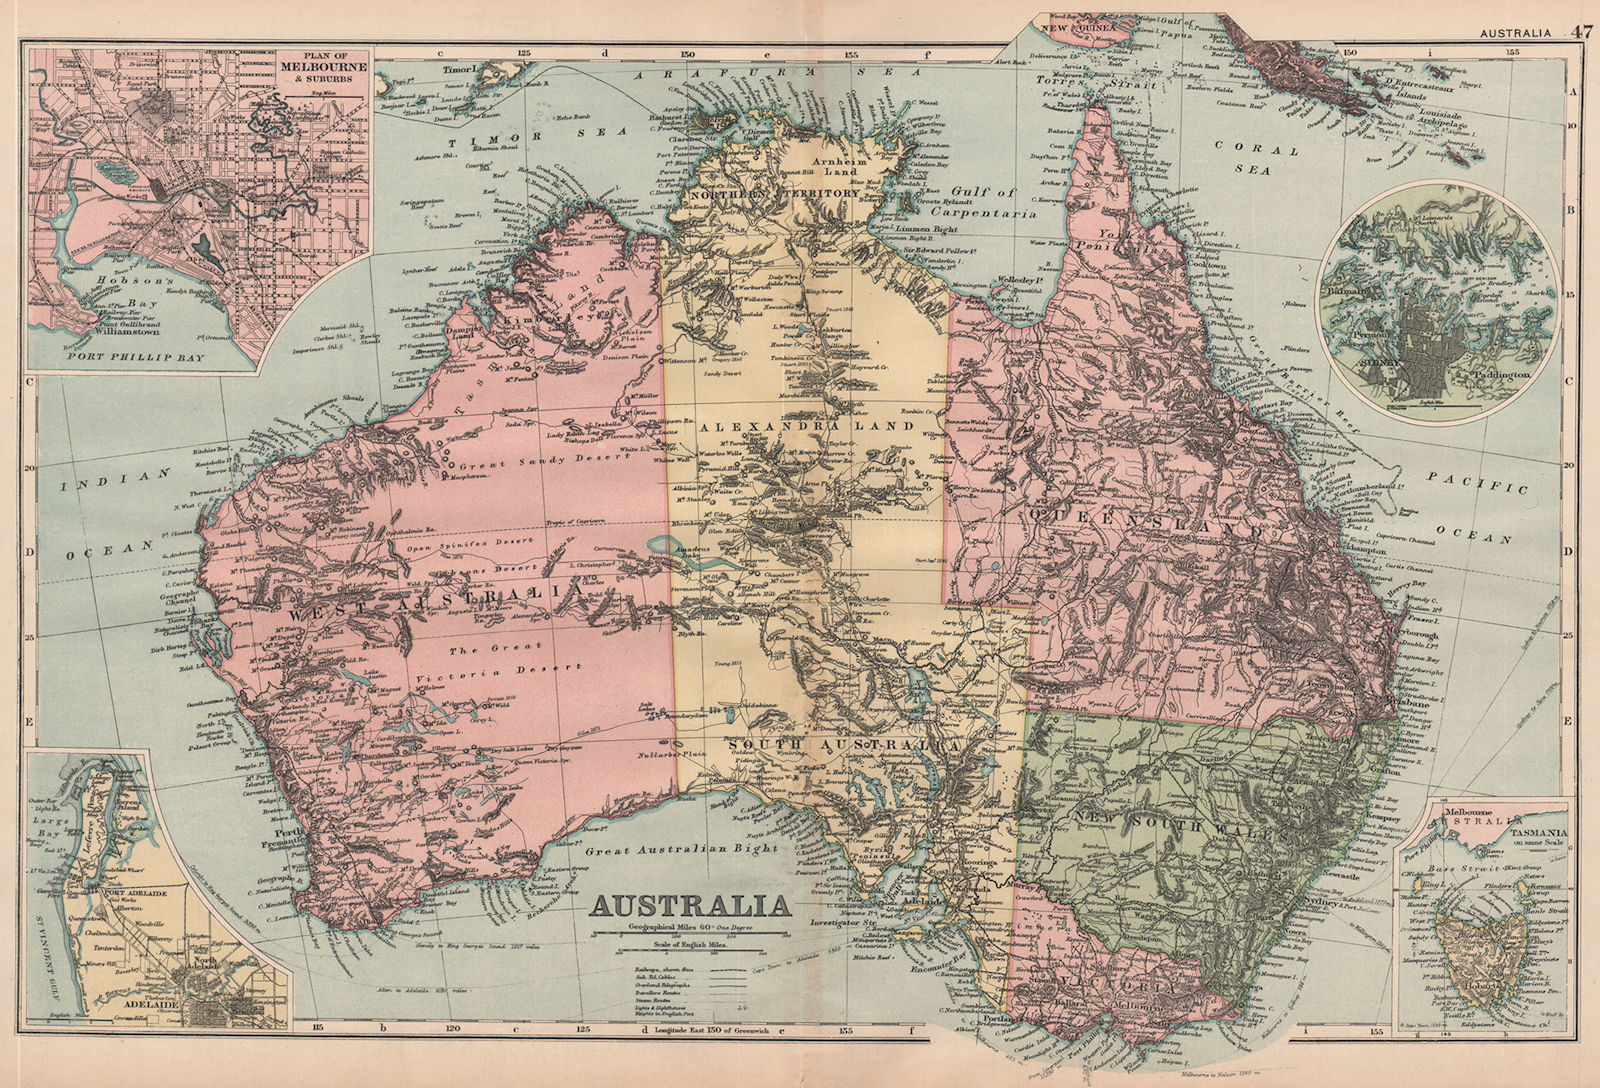 AUSTRALIA. Alexandra Land. Melbourne Adelaide Sydney. Explorers routes 1893 map